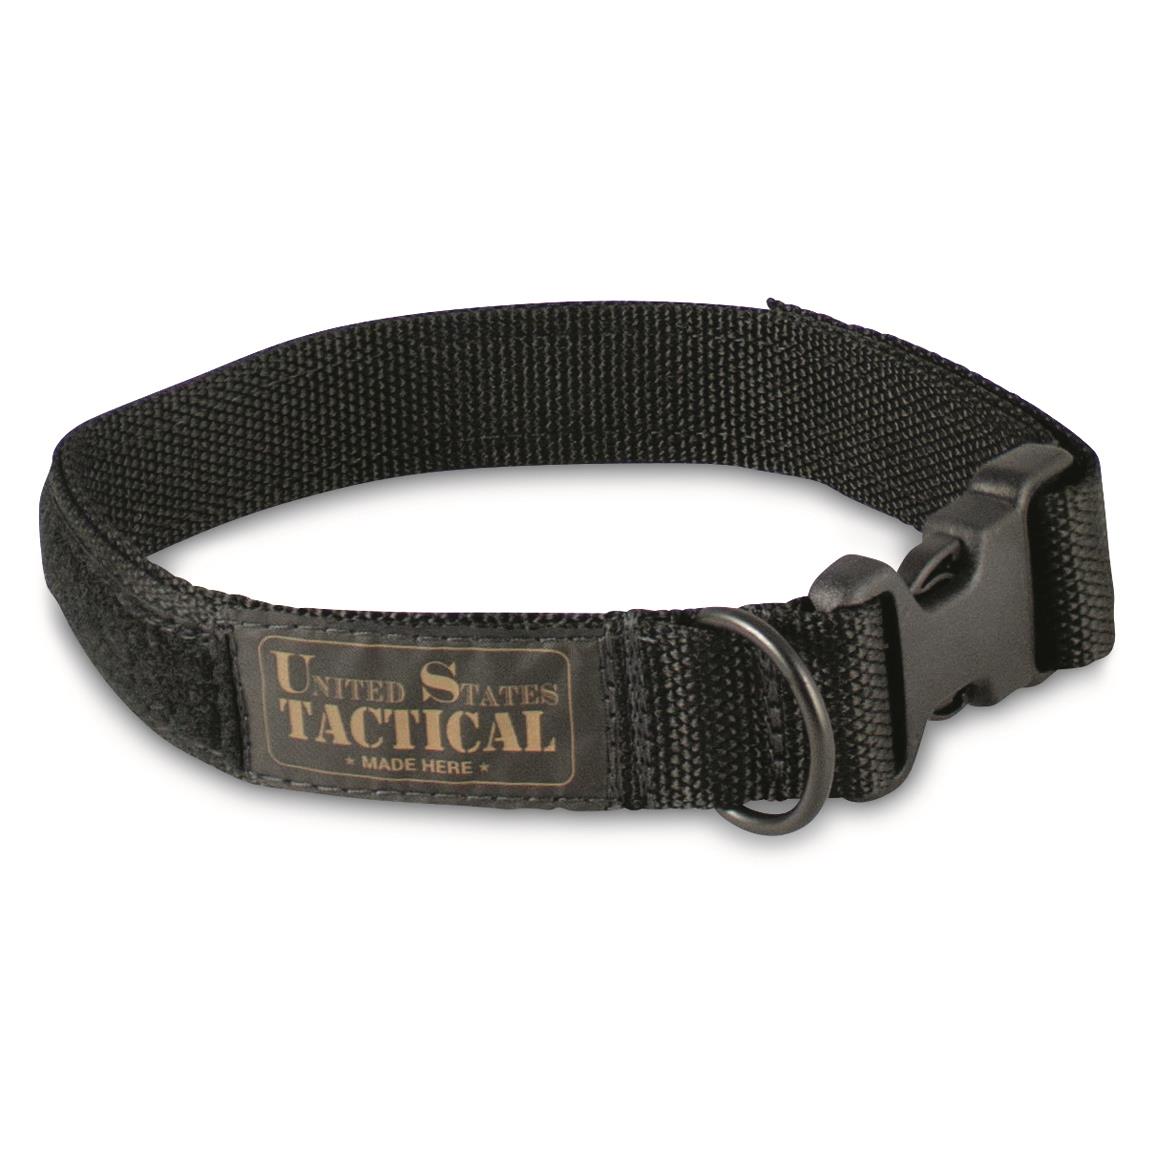 United States Tactical Dog Collar, Black